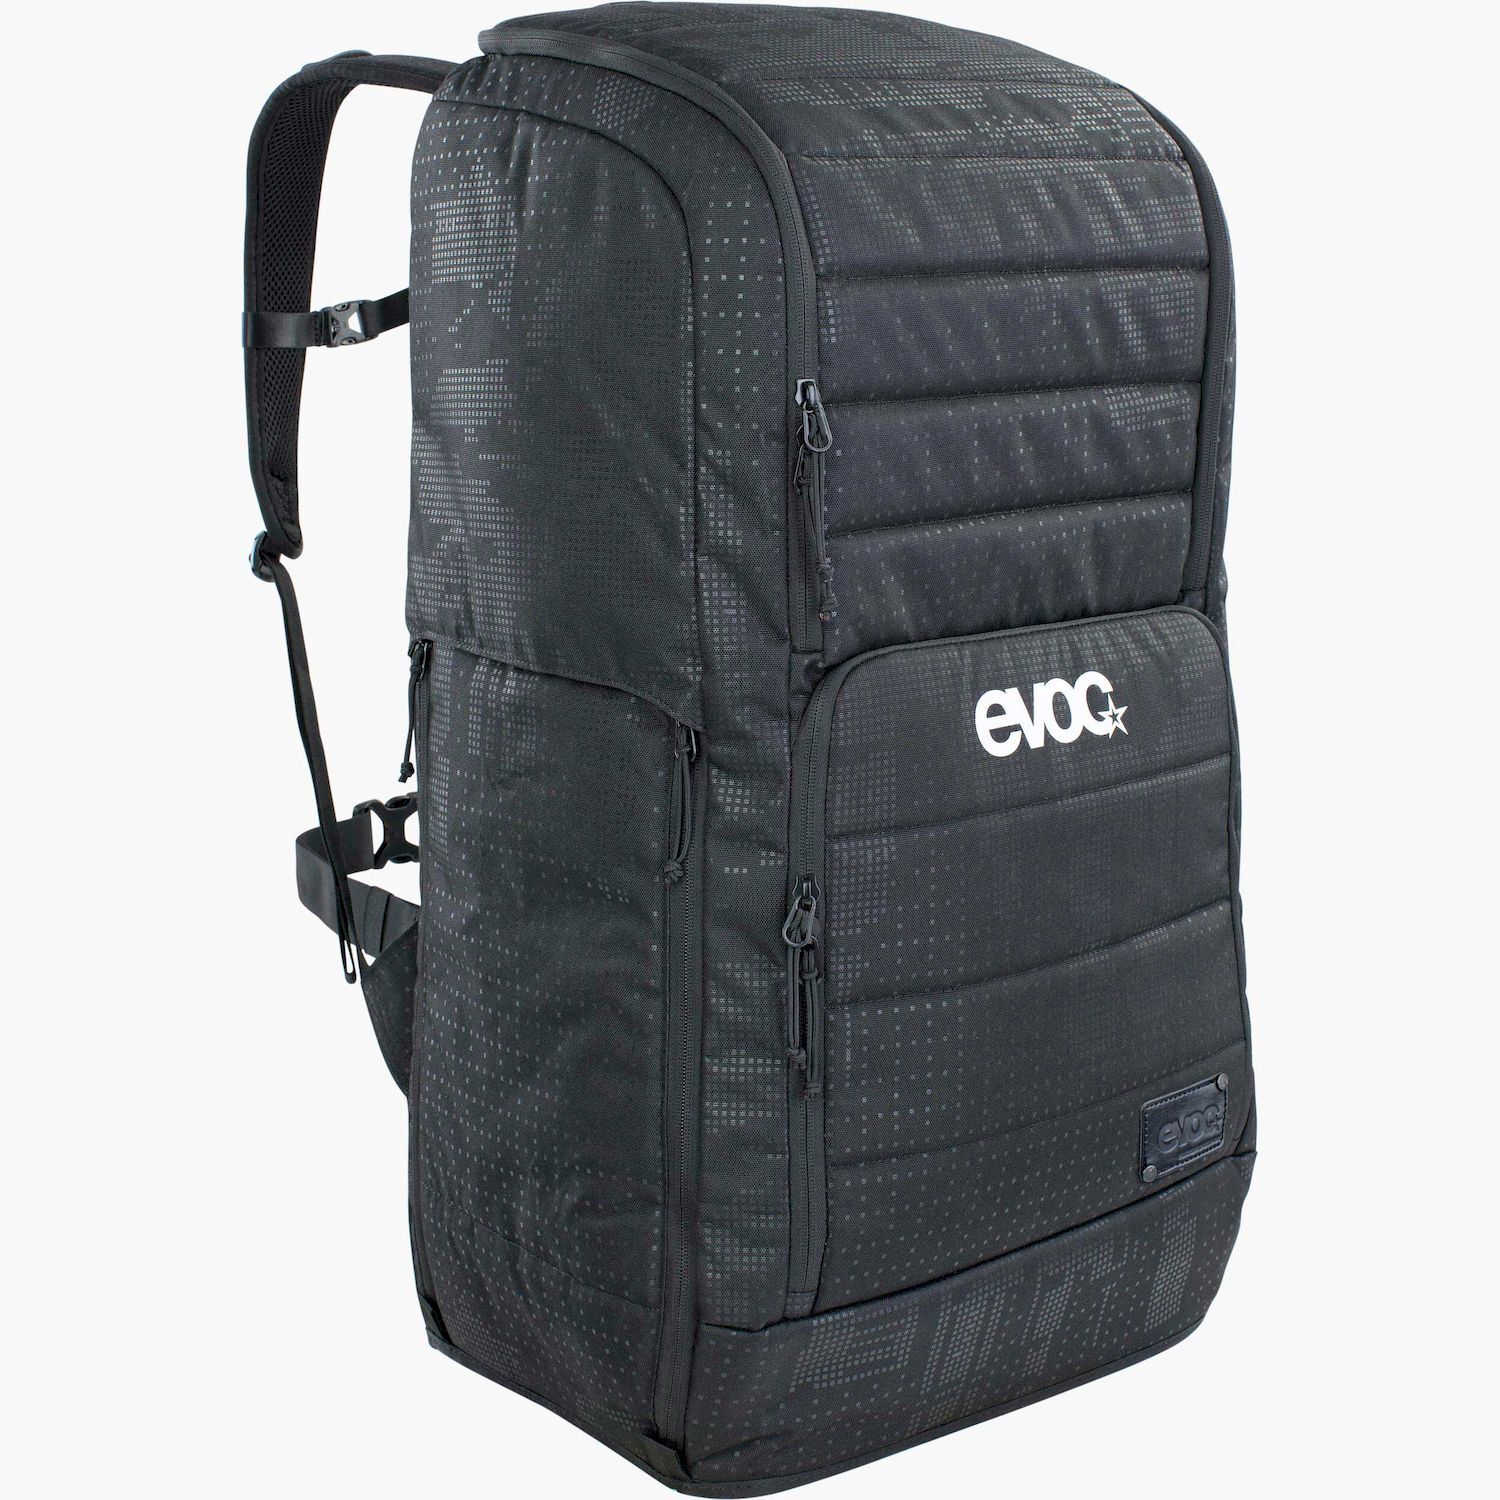 Evoc Gear Backpack 90 - Ski mono laukku